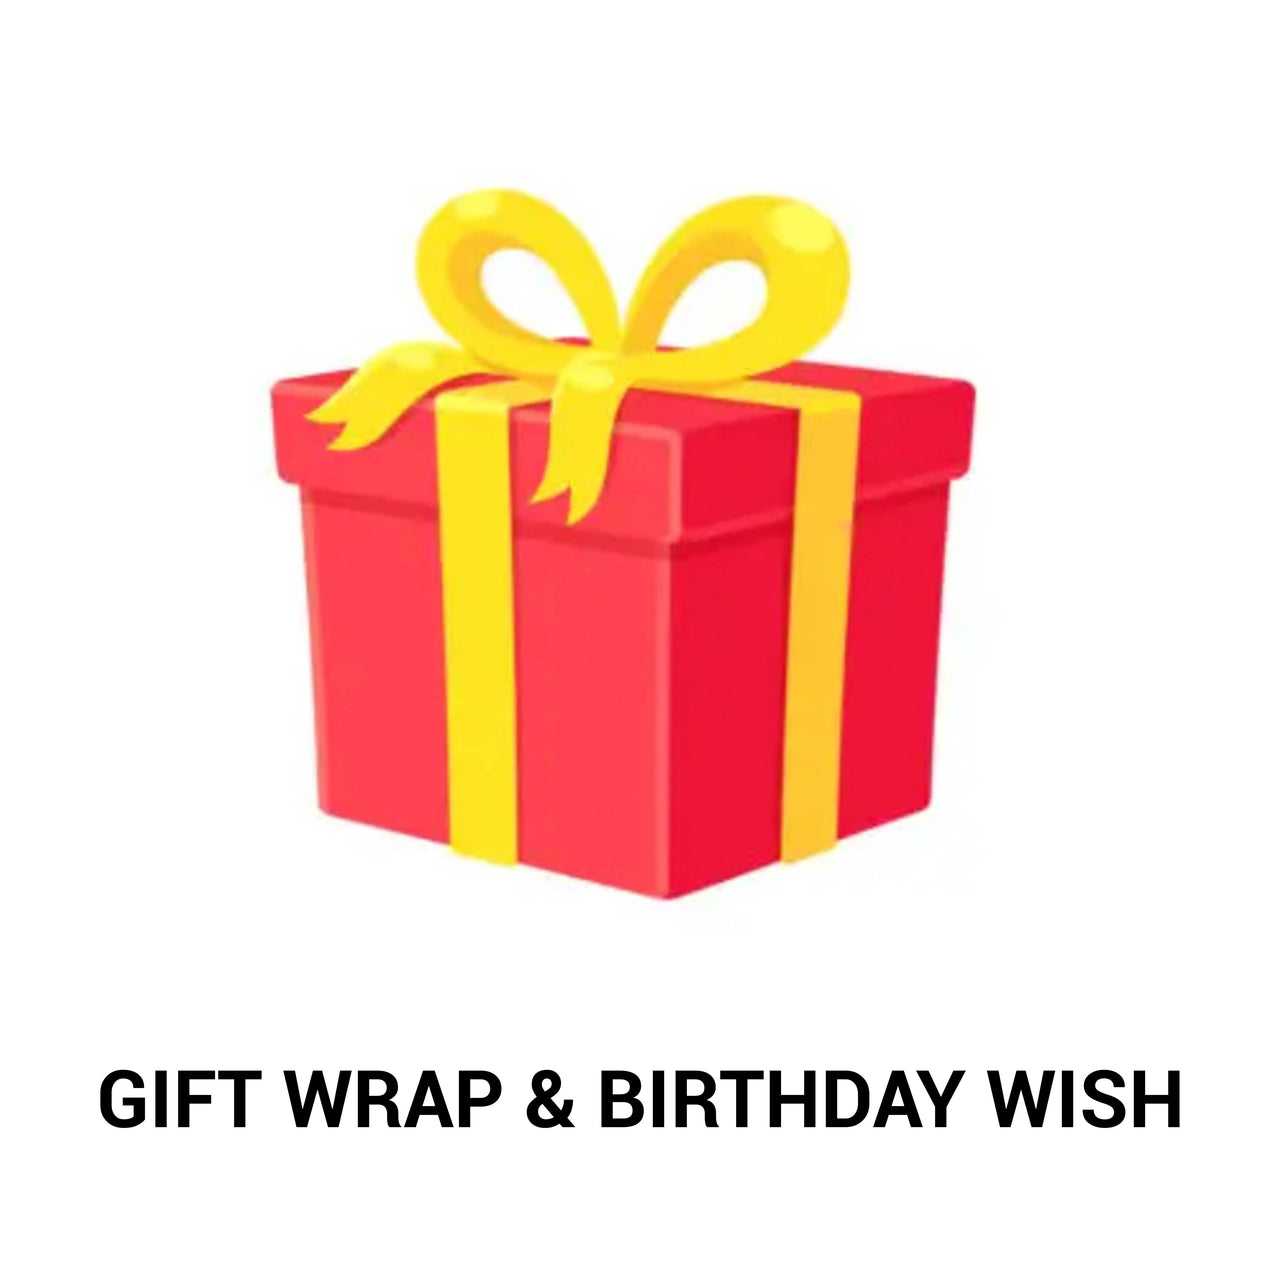 Birthday Wish and Gift Wrap